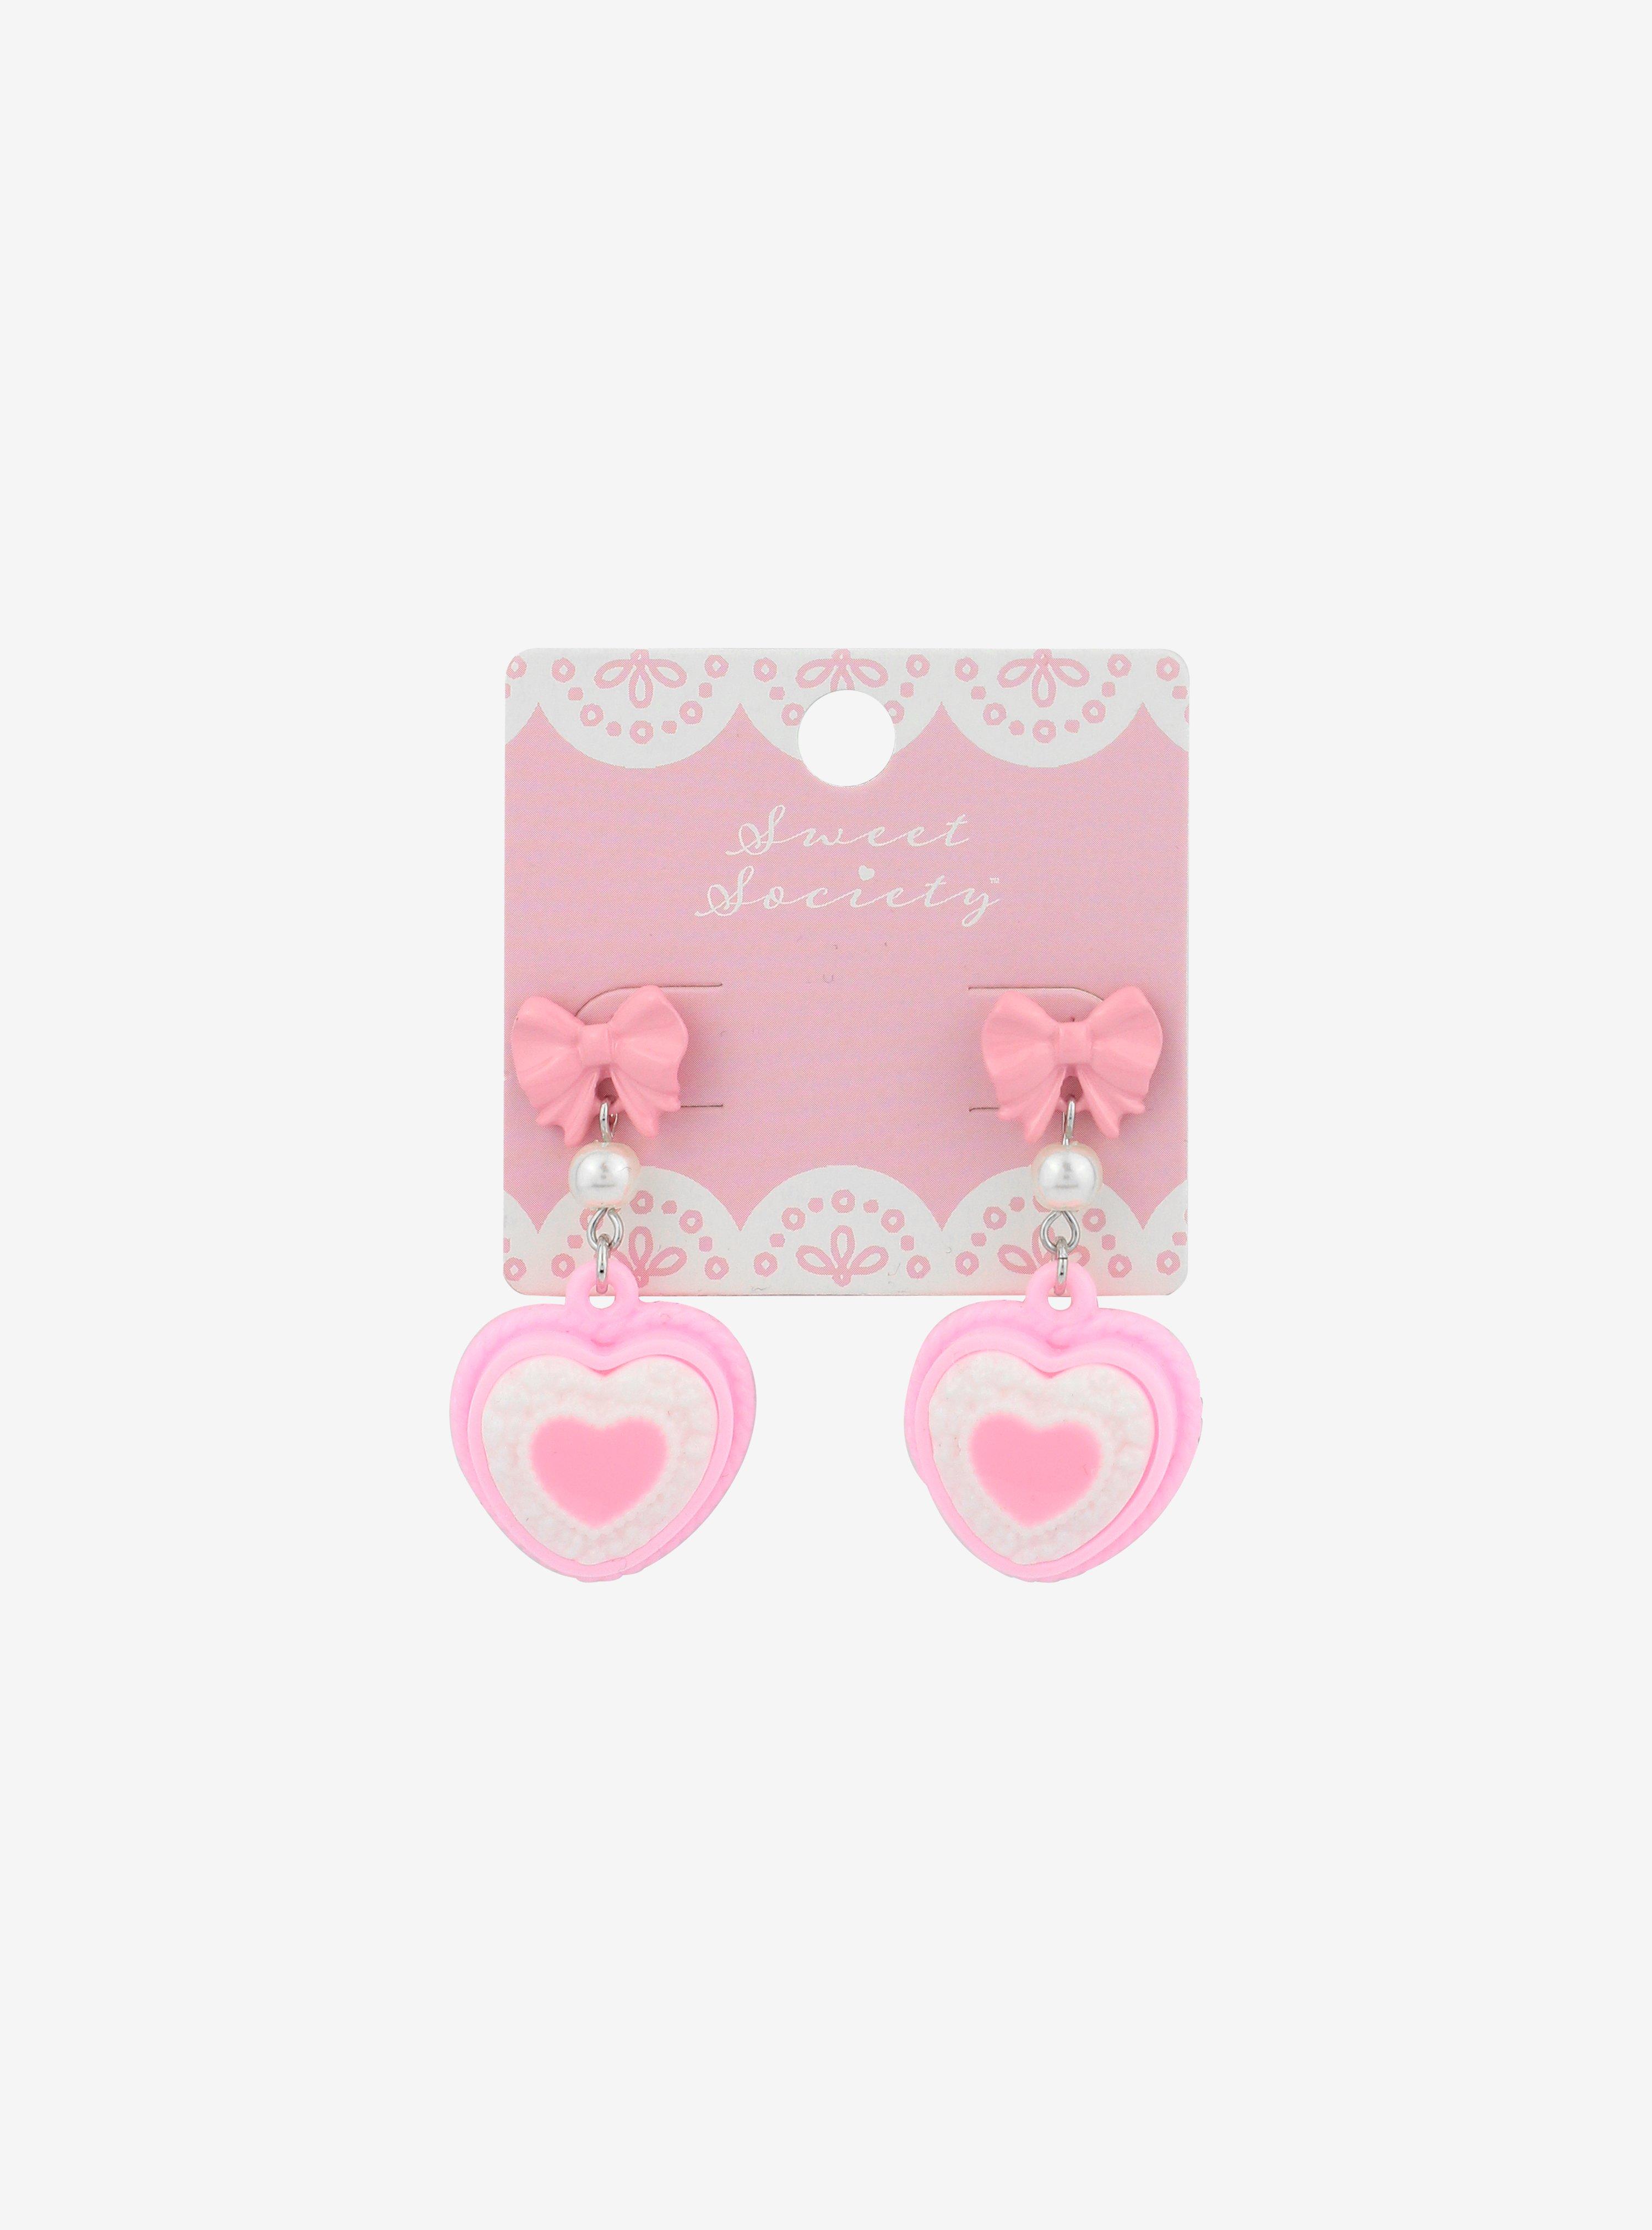 Pink Heart Cake Drop Earrings, , hi-res